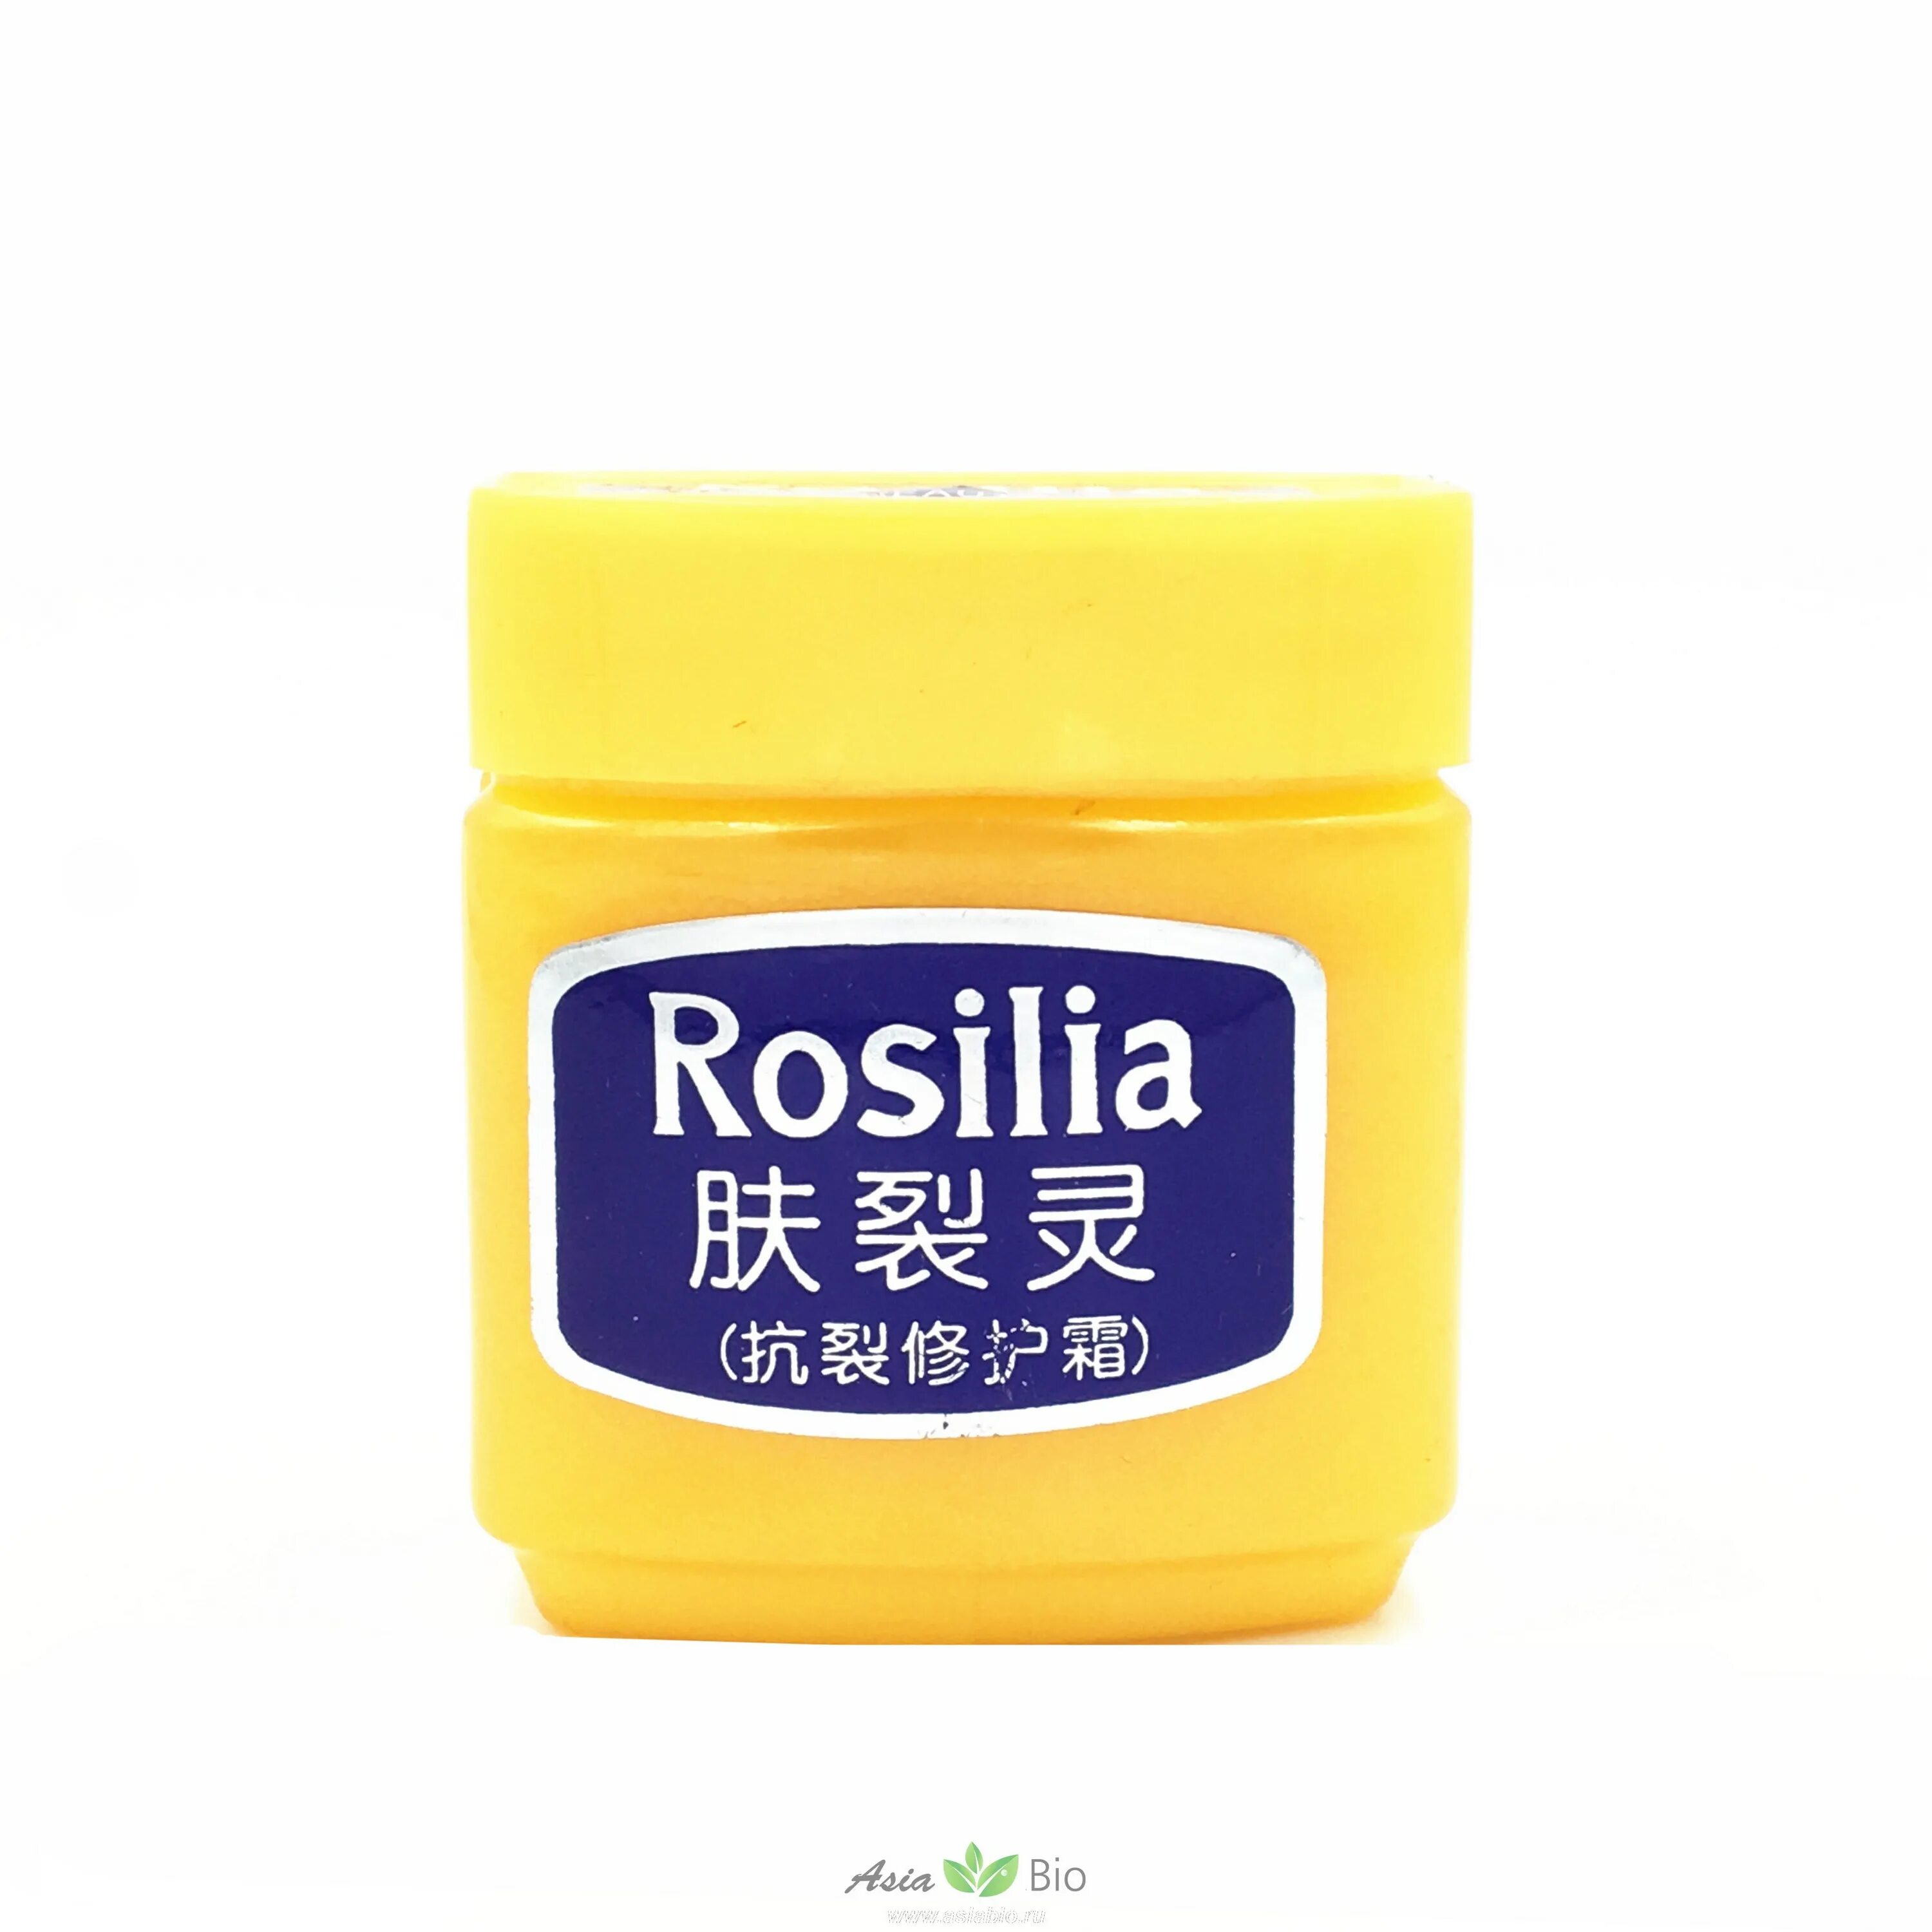 Rosilia китайская мазь. Крем от трещин Rosilia Китай.